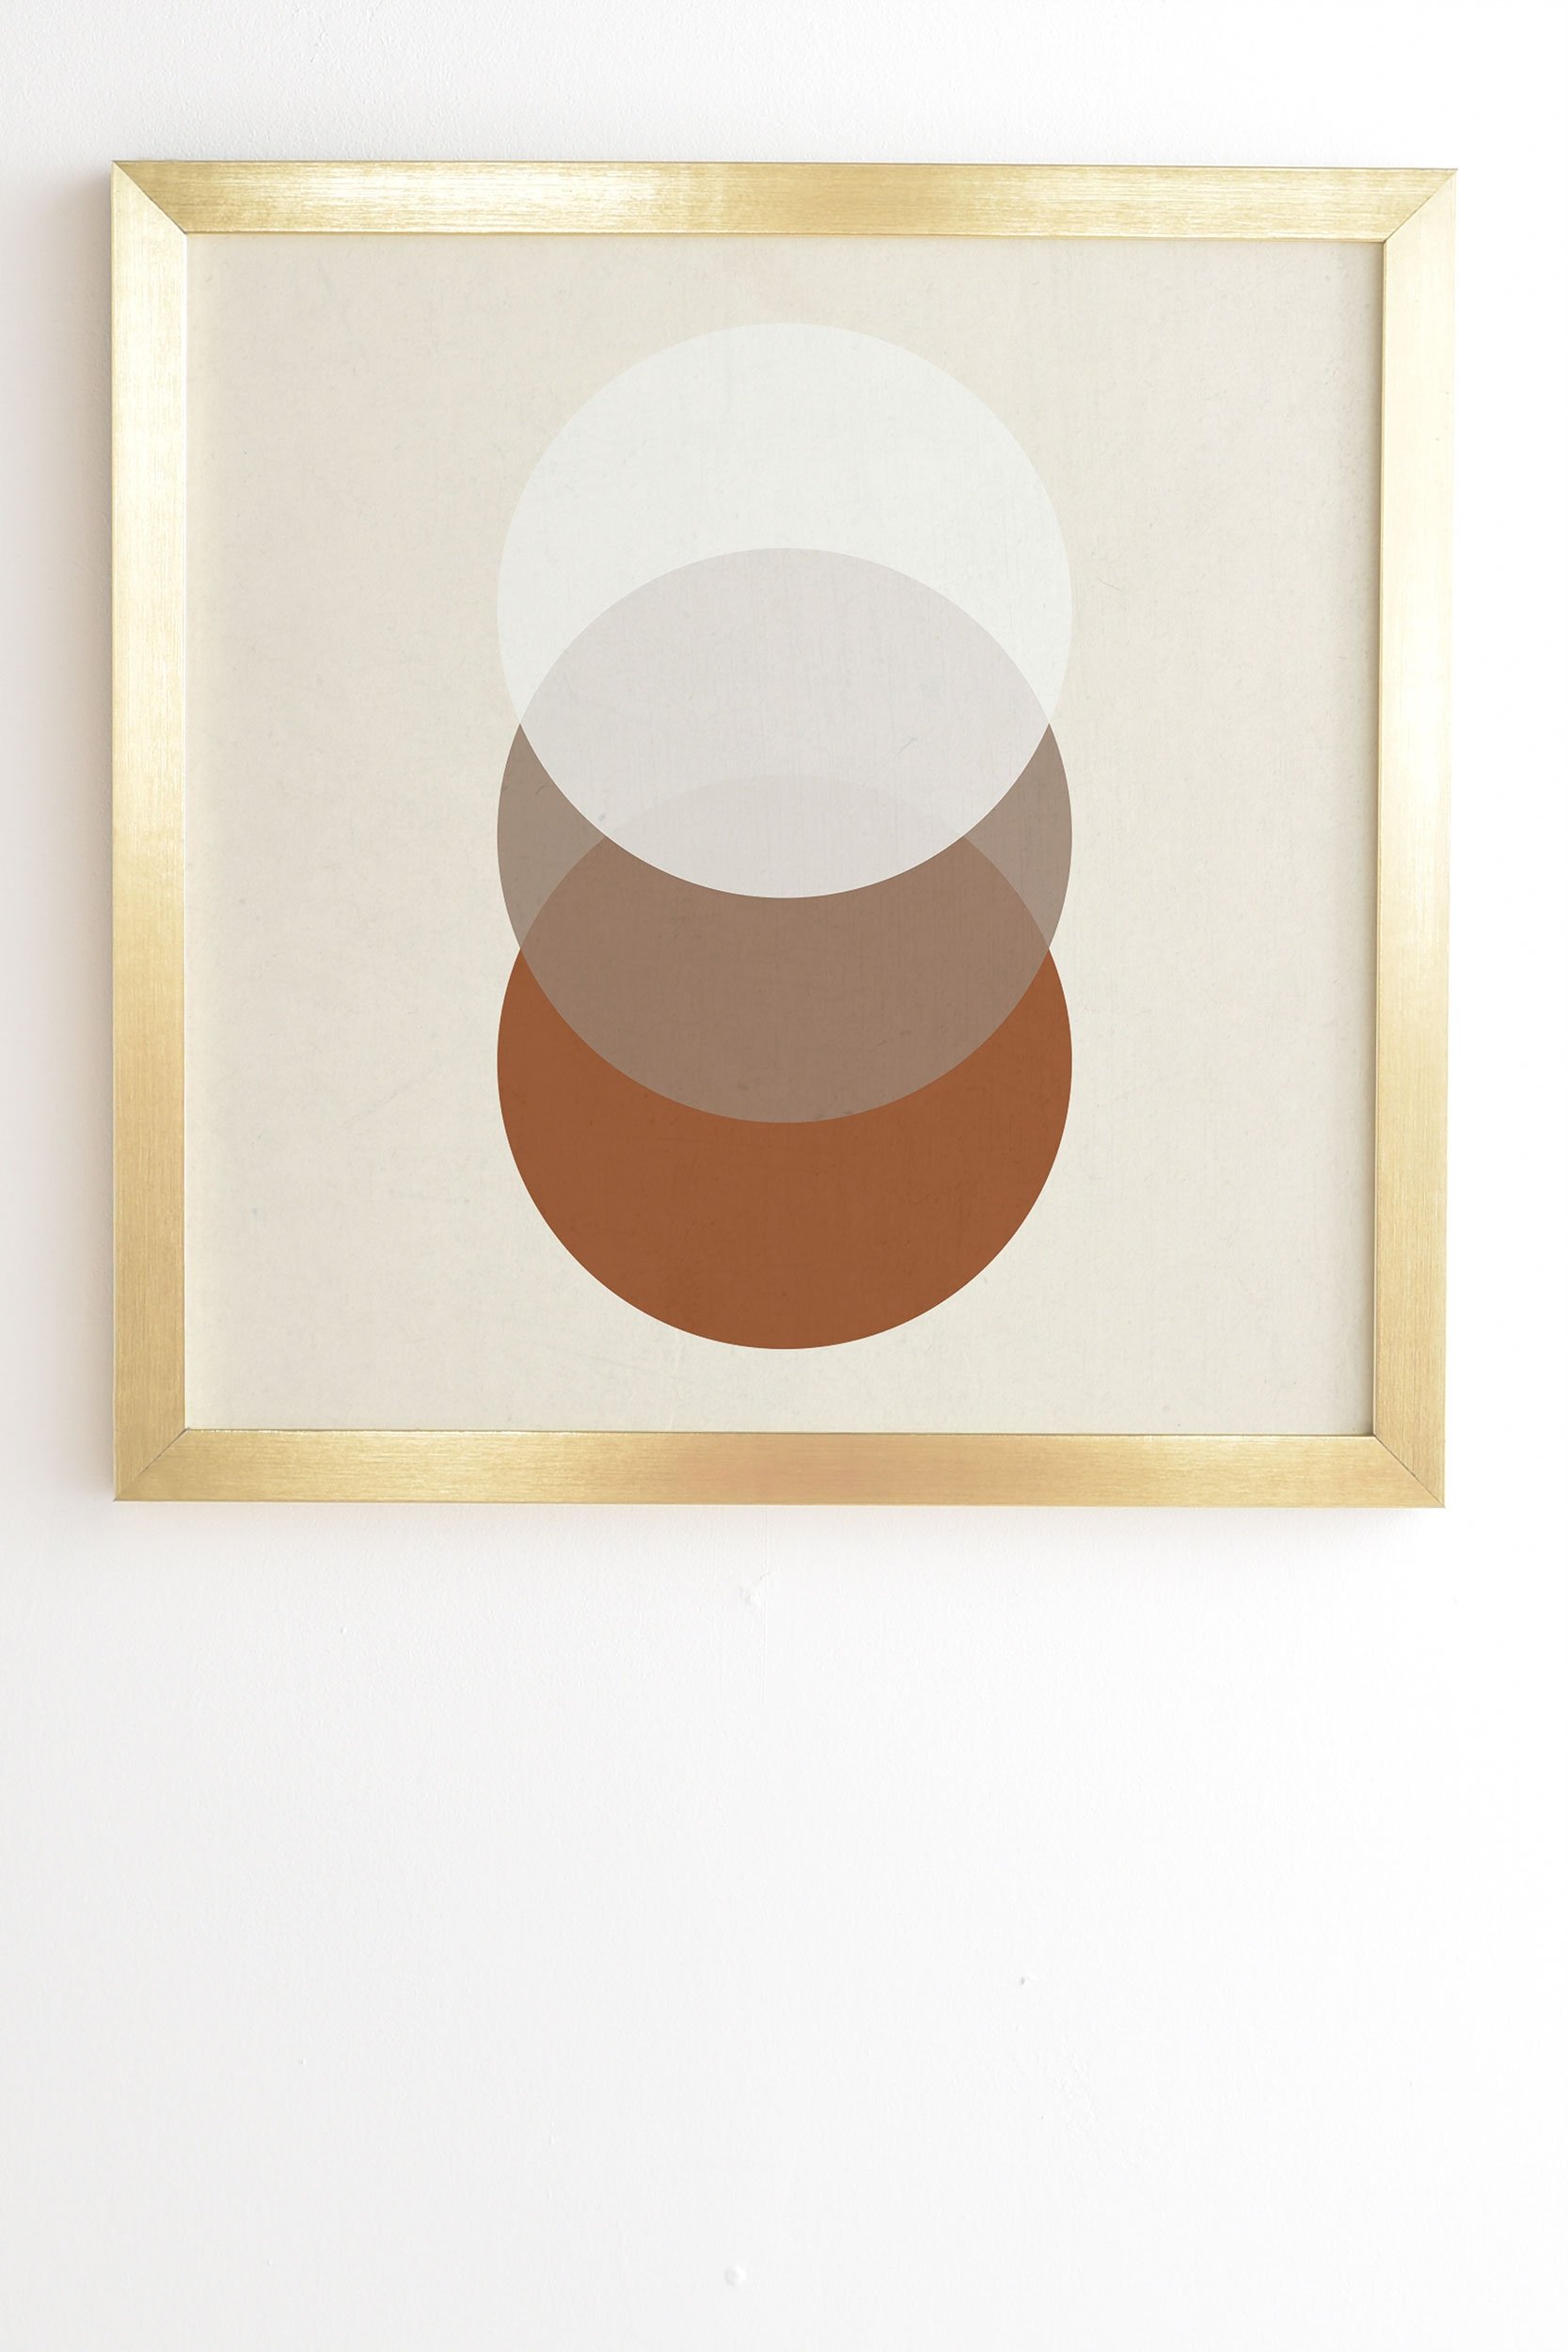 Orbit 005 by Rose Beck - Framed Wall Art Basic Gold 14" x 16.5" - Image 1